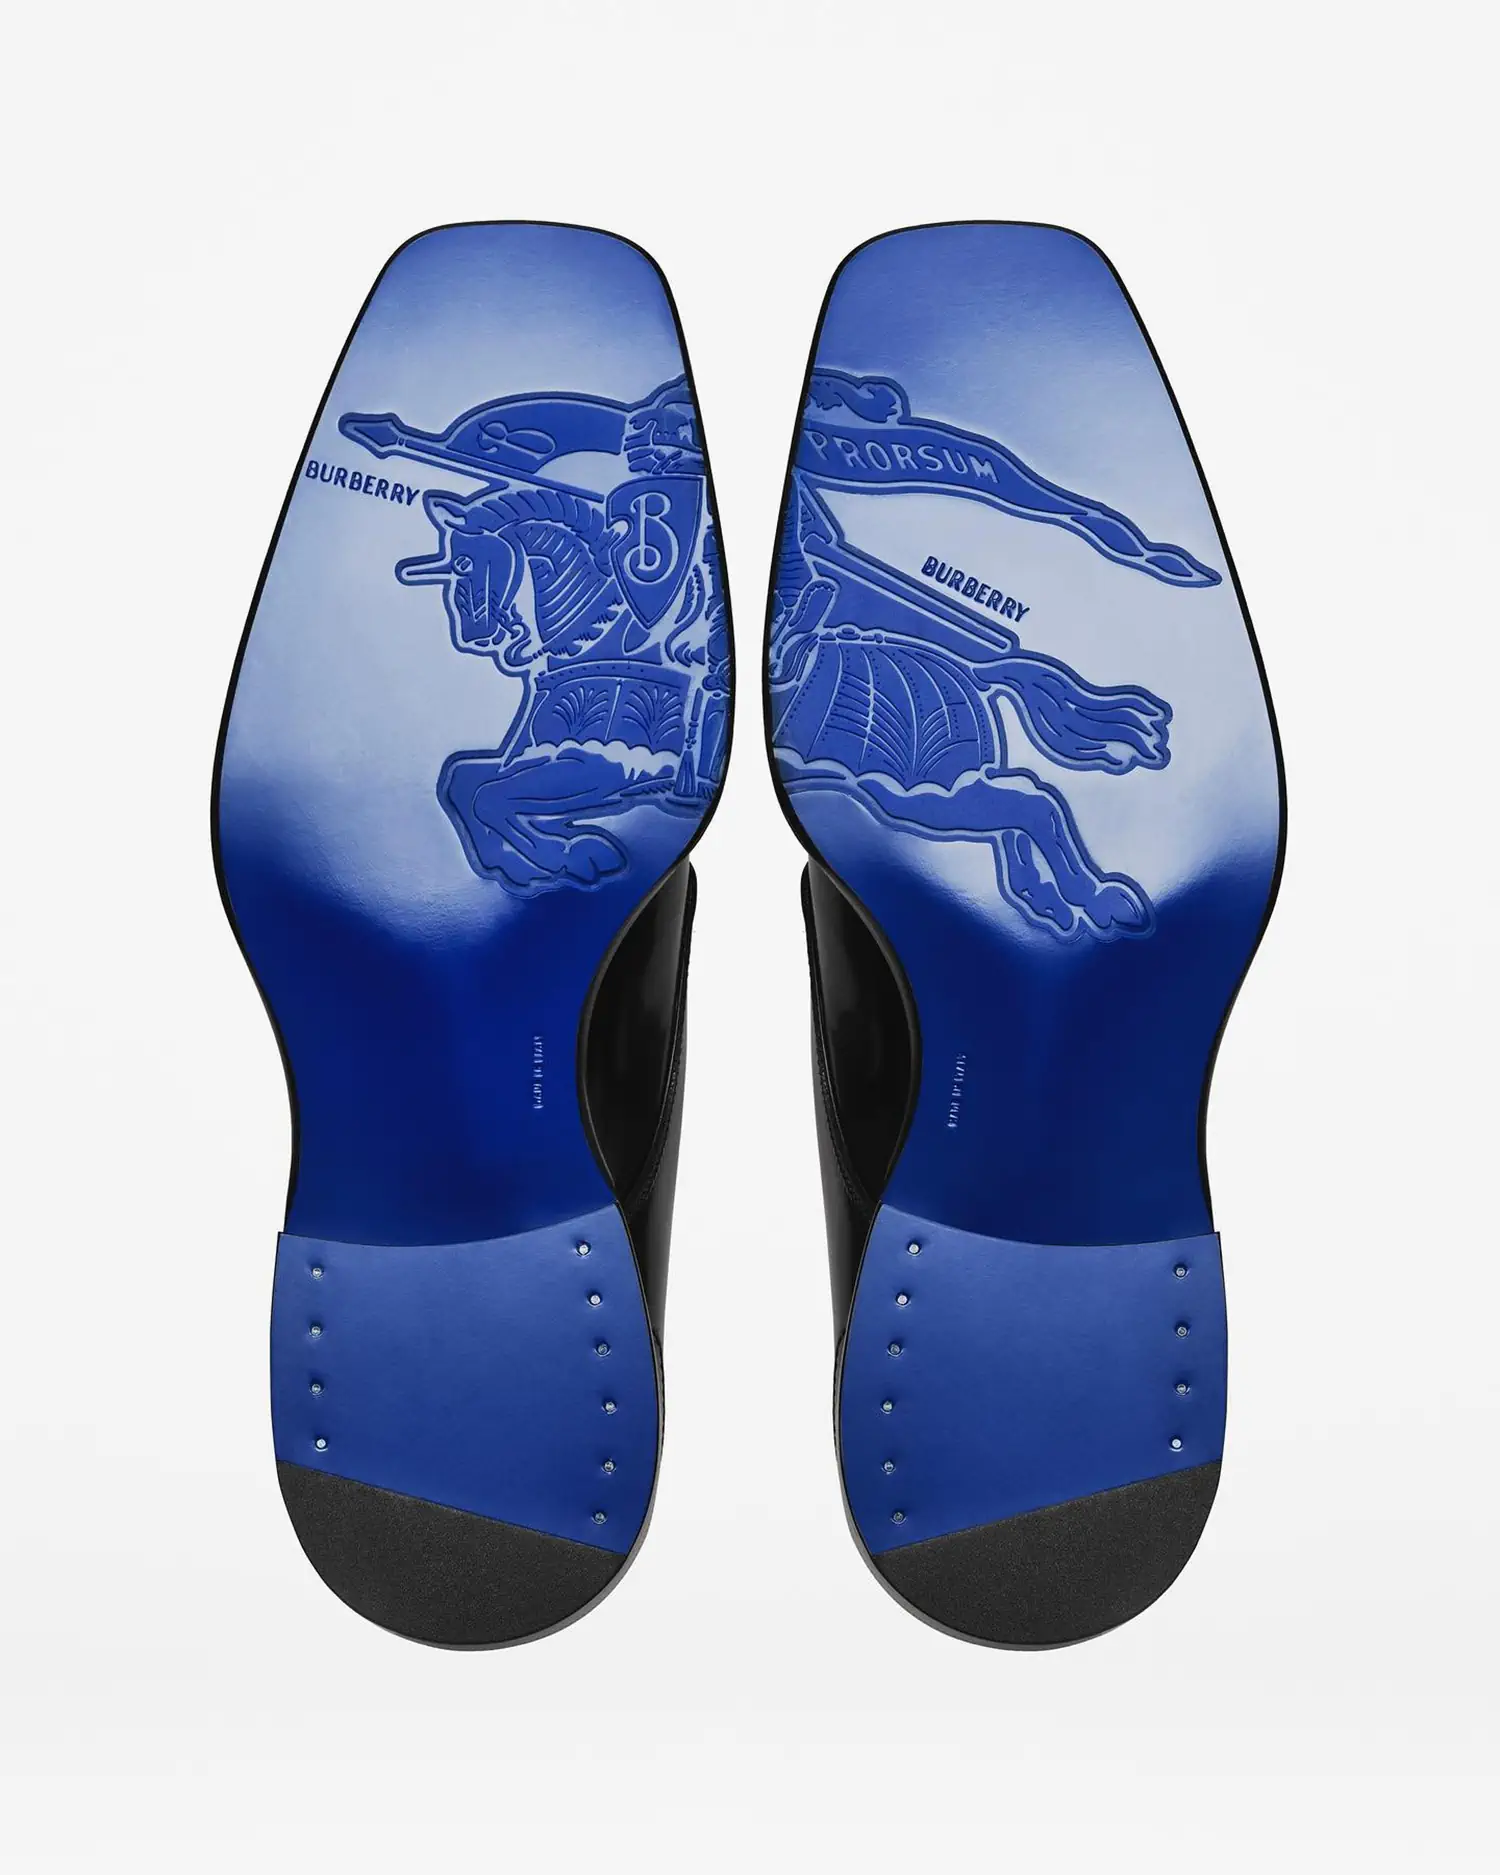 Burberry Footwear Fall/Winter 2023 showcases Daniel Lee's bold blue branding